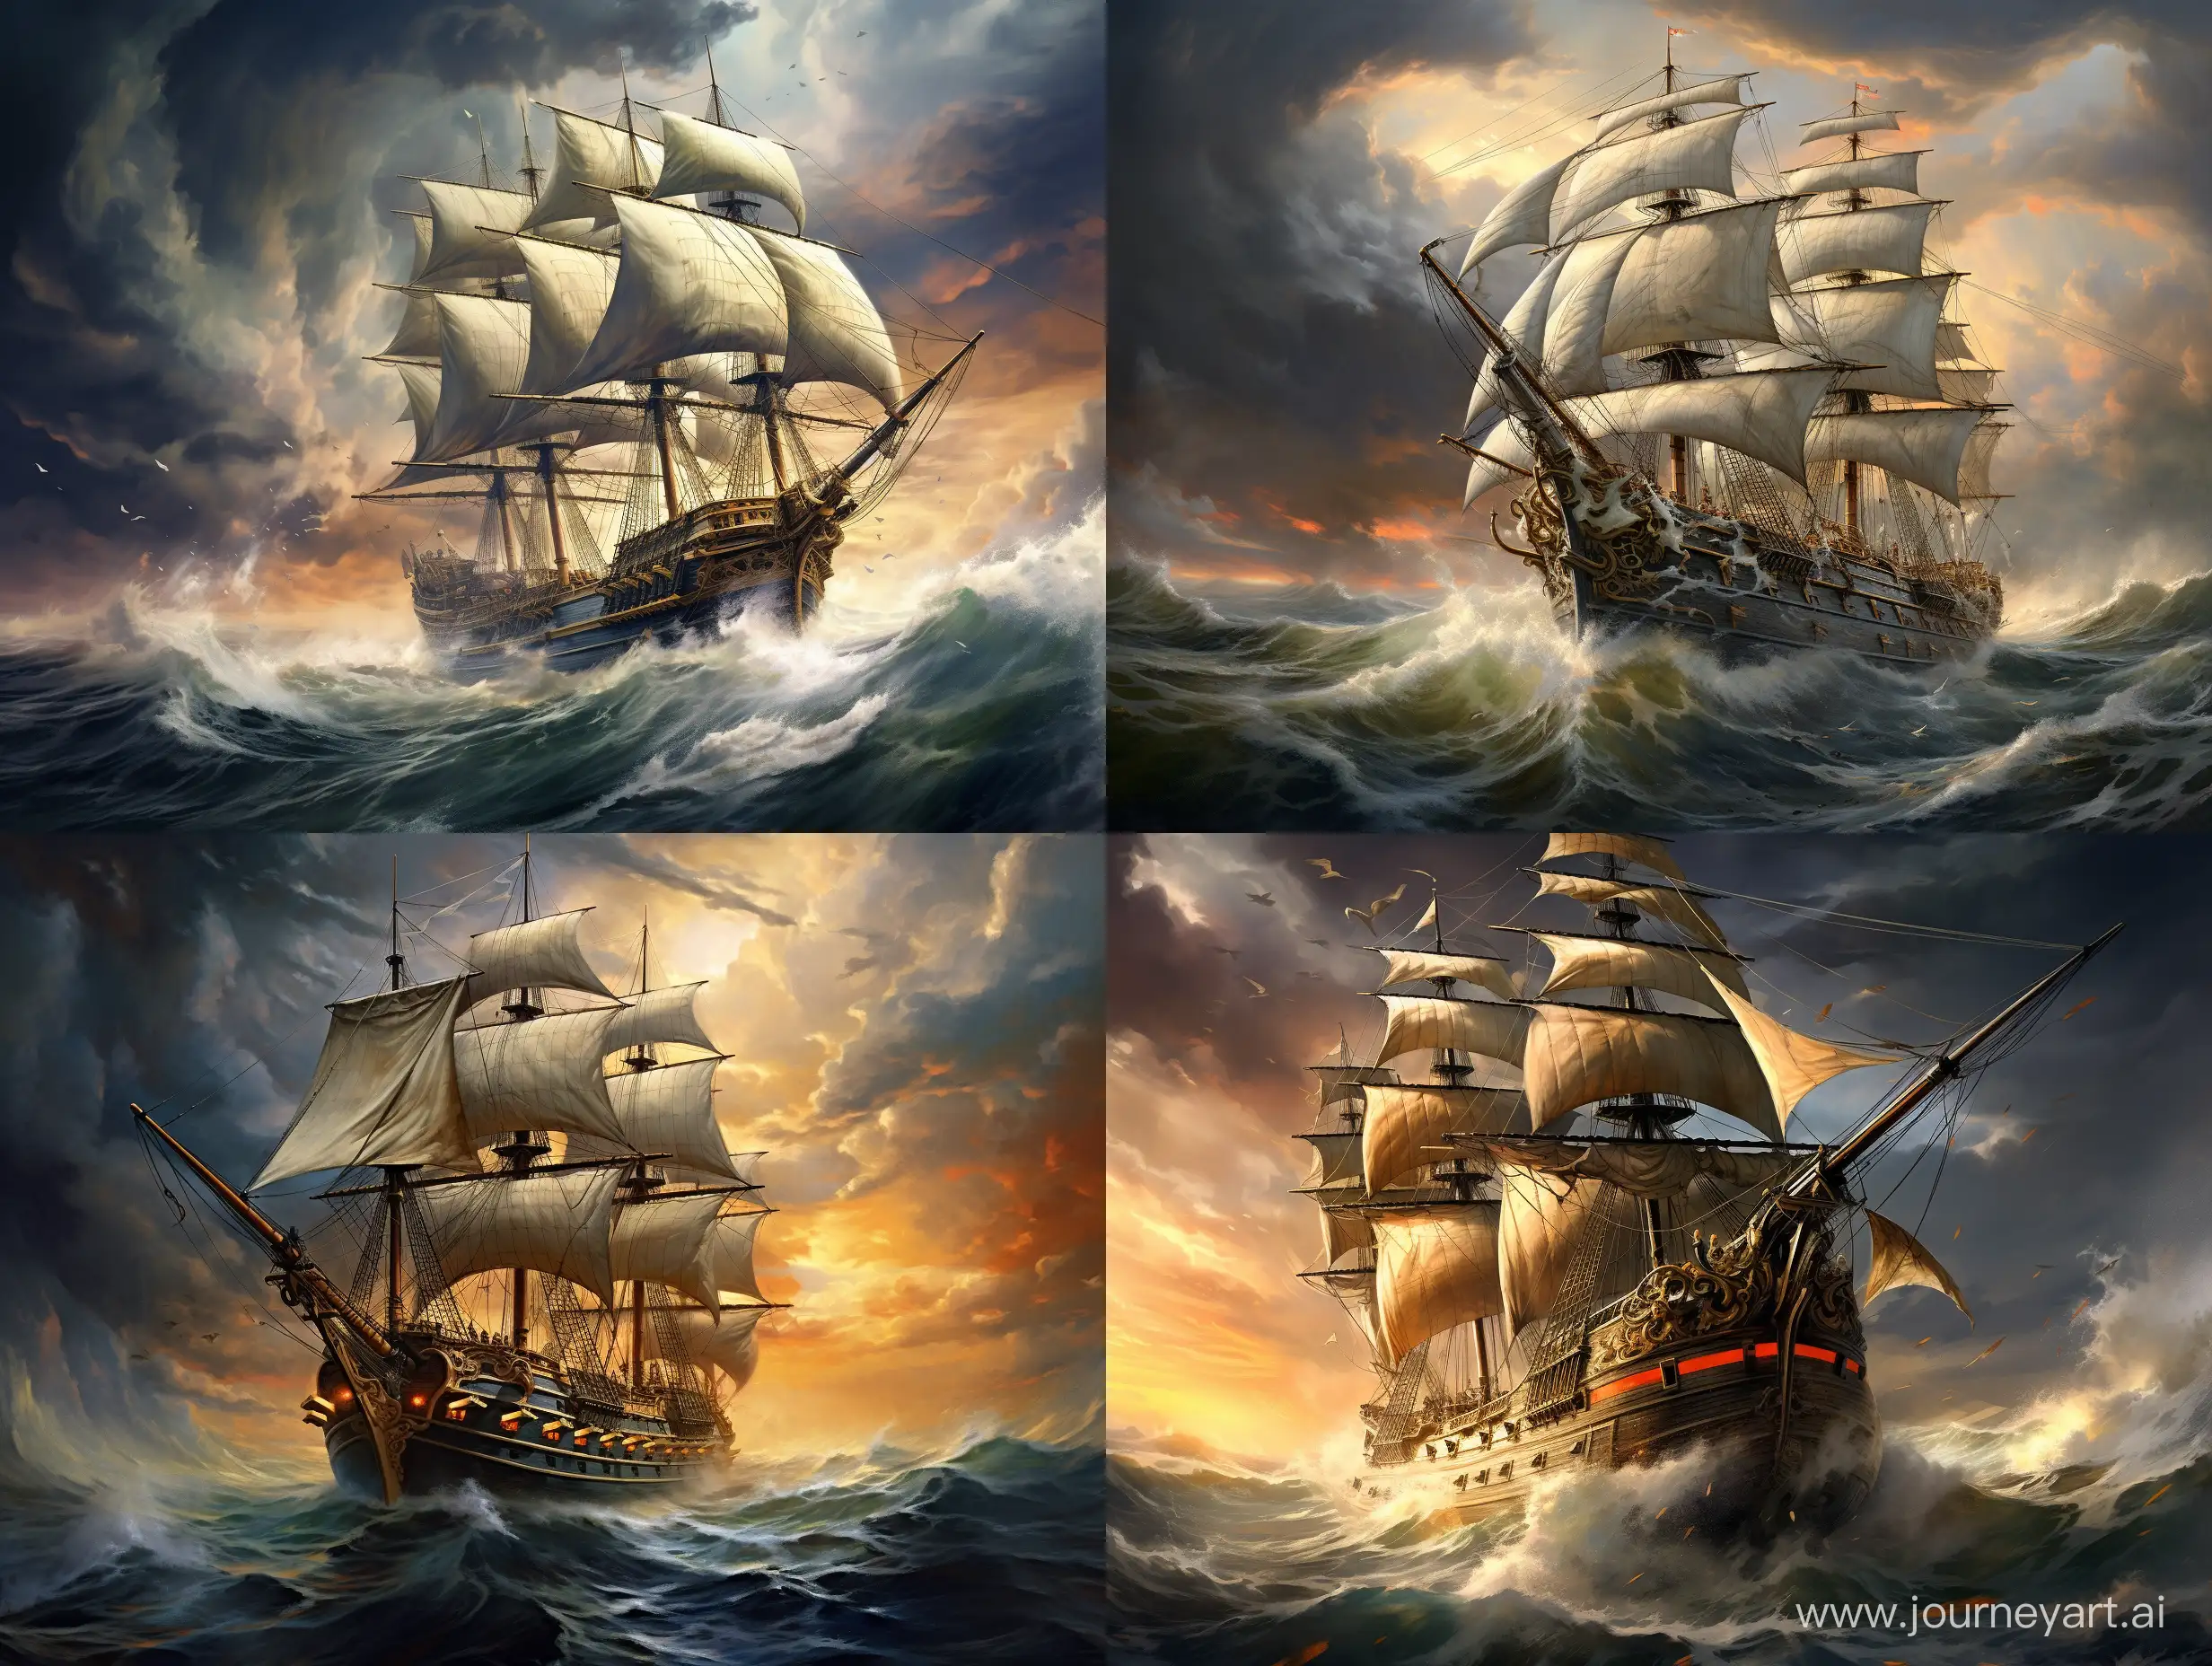 Majestic-Frigate-Sailing-Through-a-Stormy-Sea